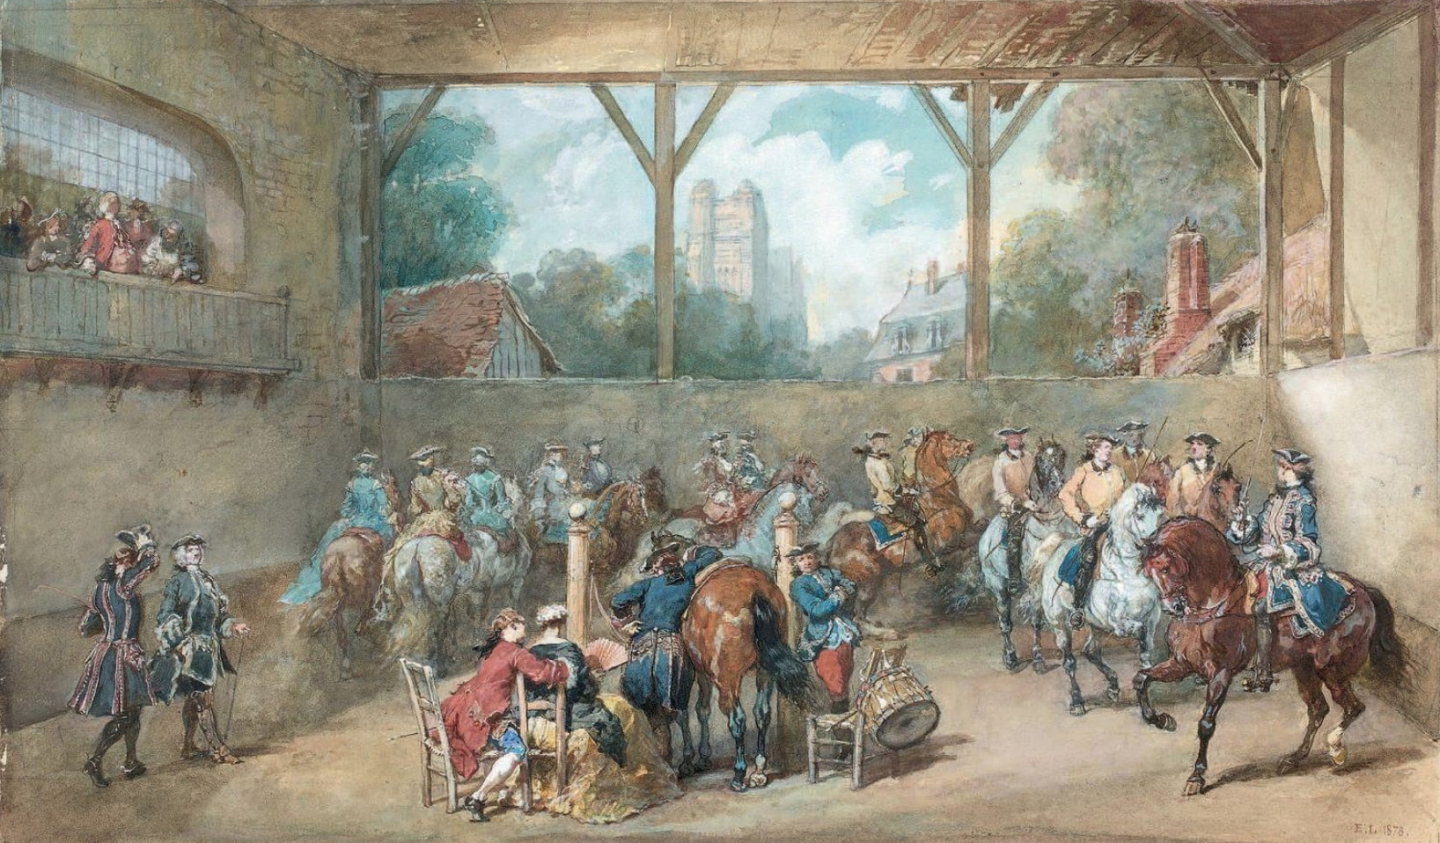 The Lively Equestrian Art of Eugène-Louis Lami